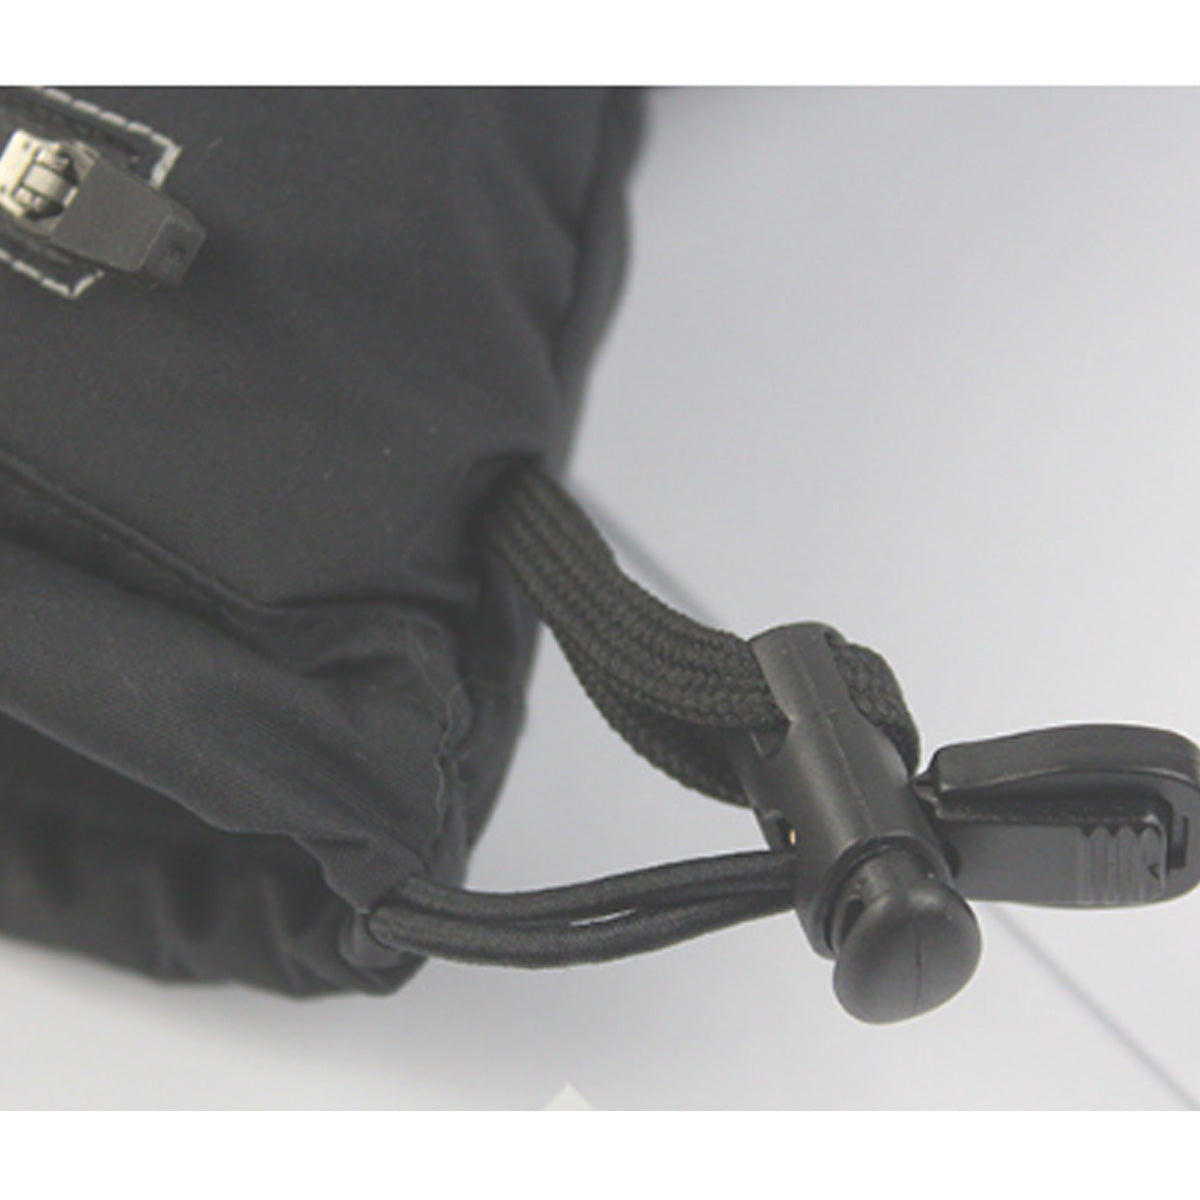 Dark Slate Gray Electric Heating Gloves Battery Ski Motorcycle Heated Gloves Winter Hand Warmer